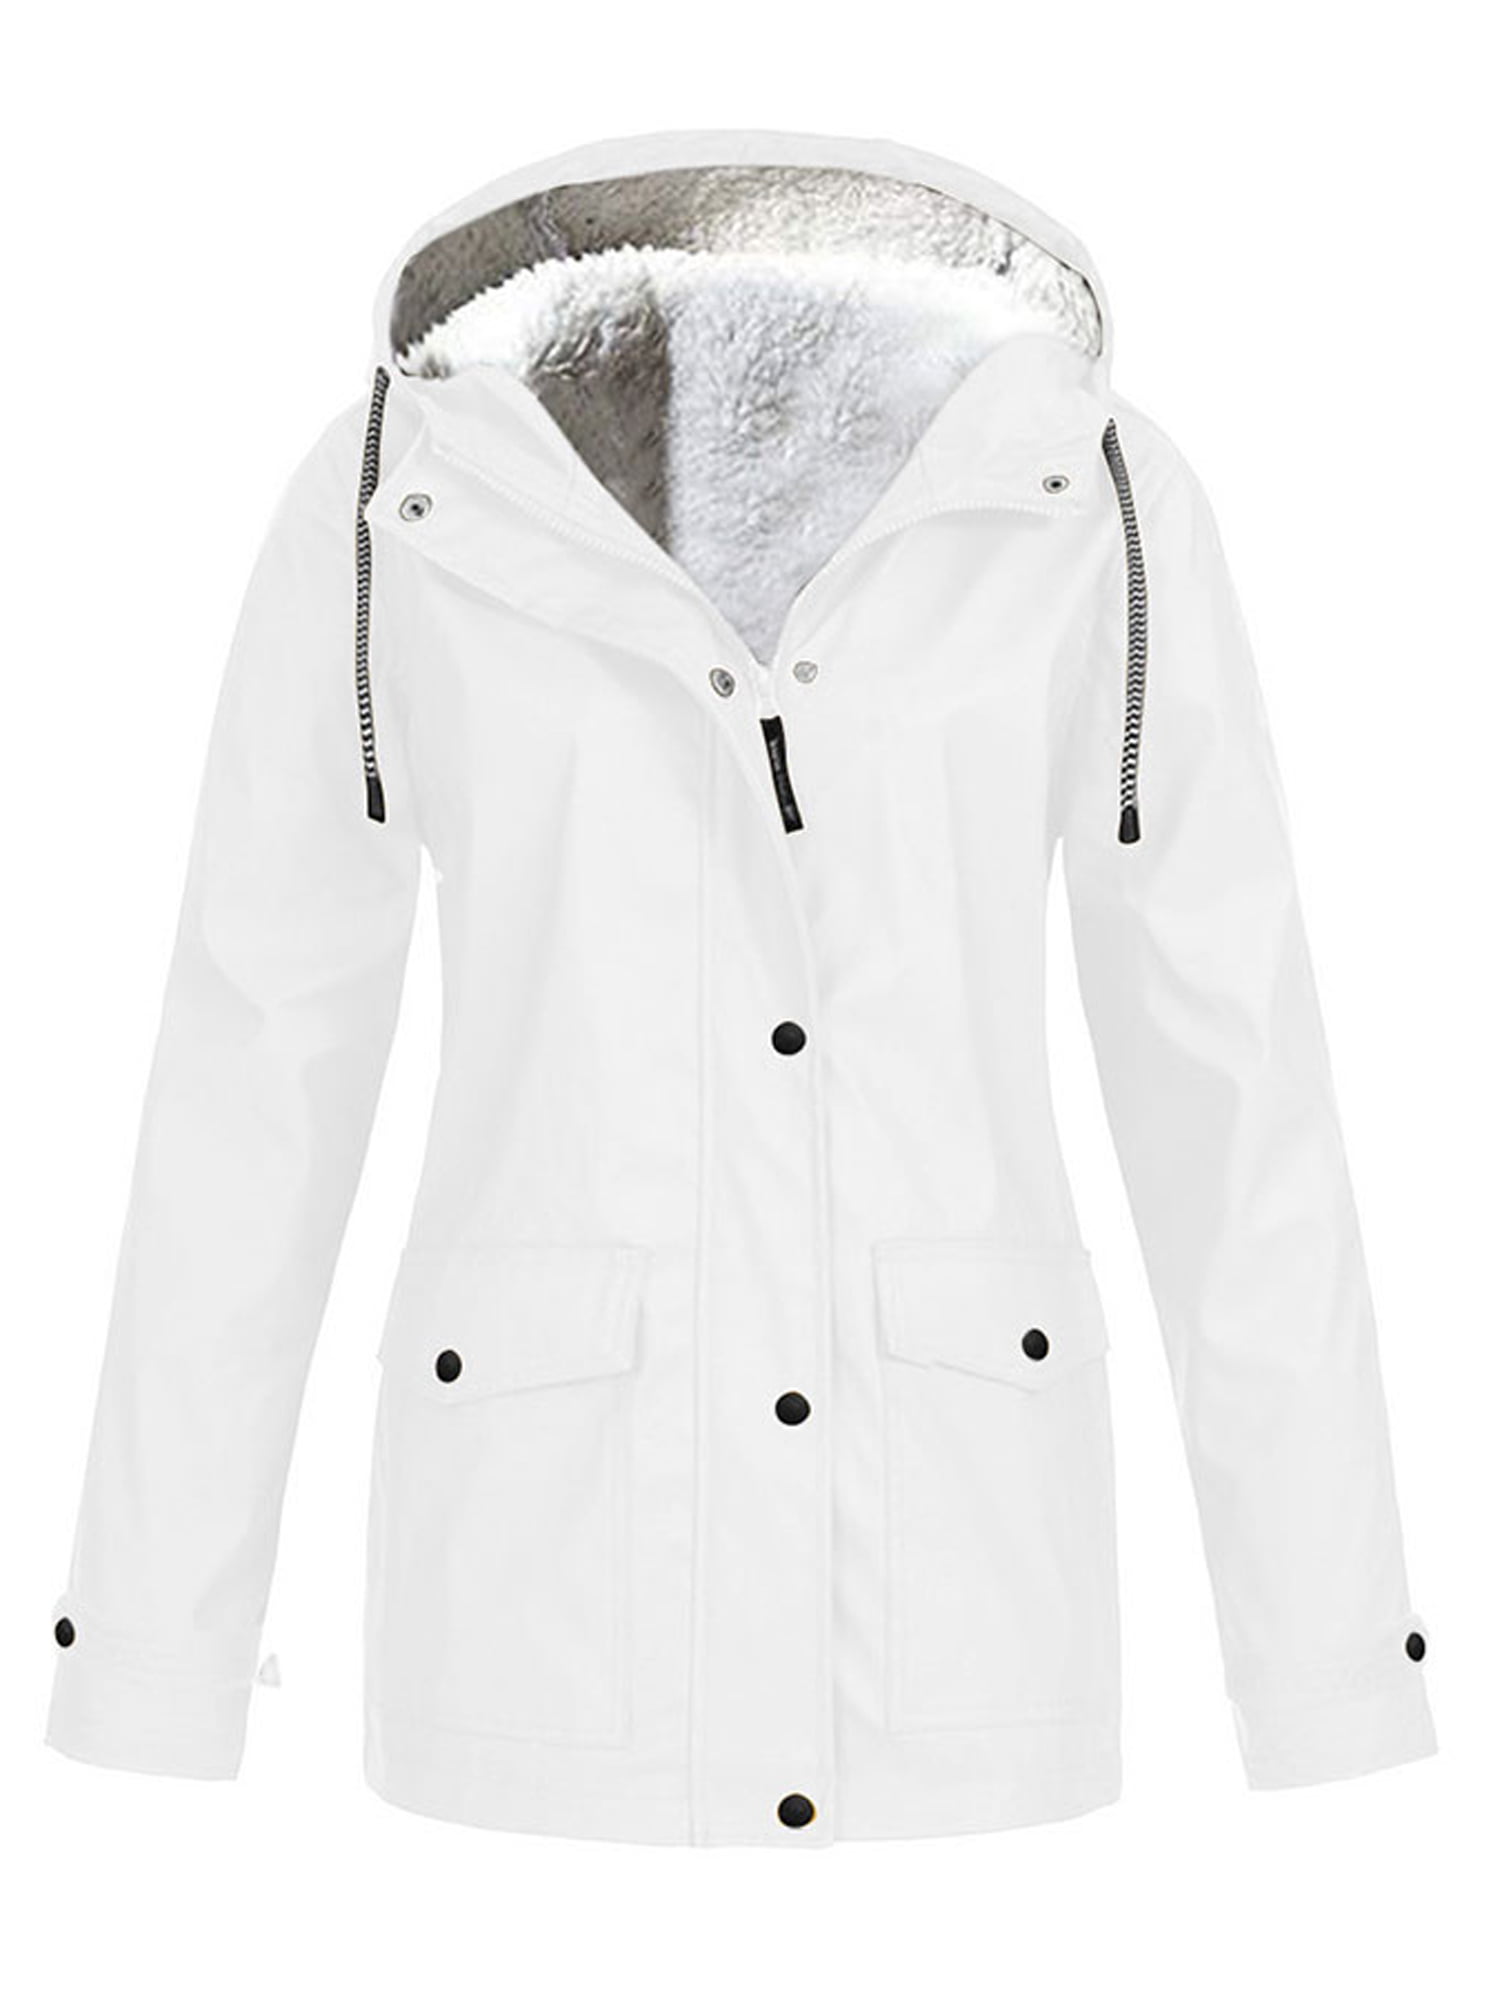 Women's Waterproof Jacket Raincoat Fleece Lined Warm Winter Coat Plus ...